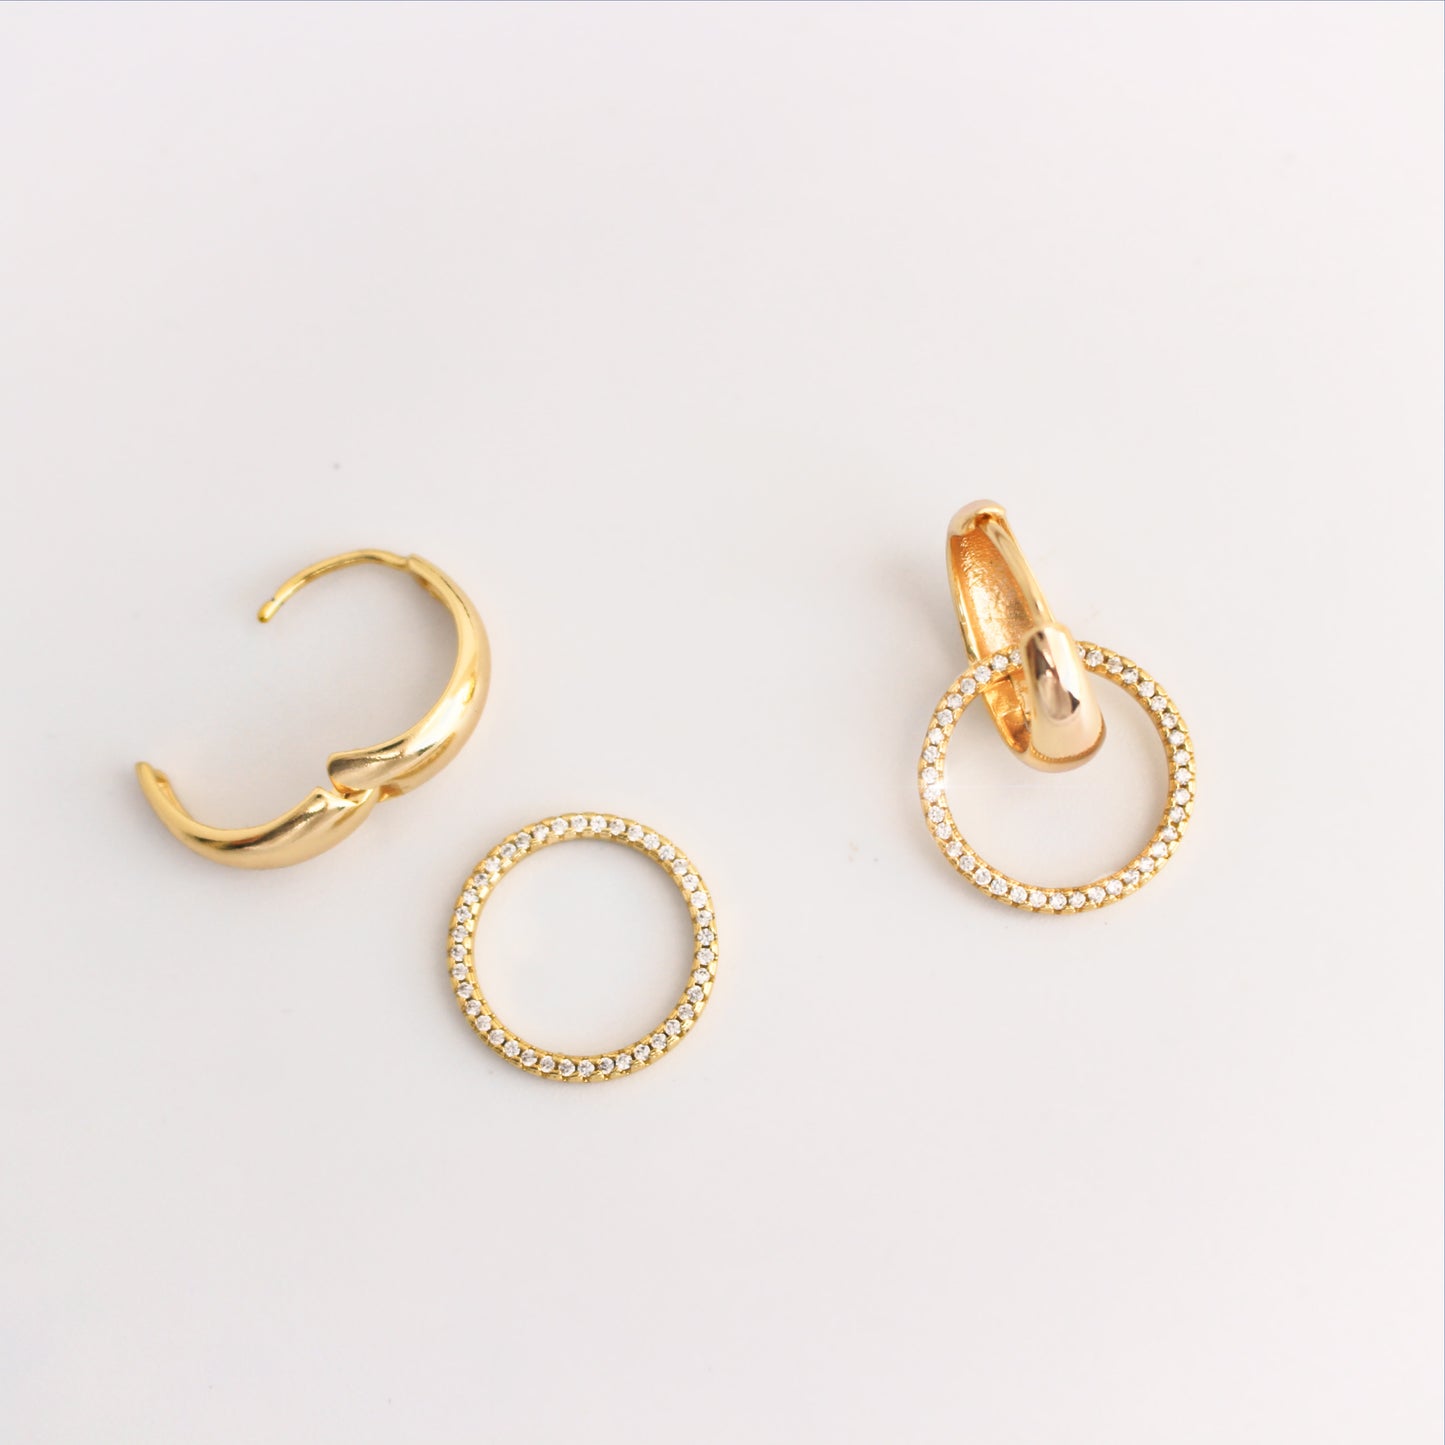 ORIELLE - Versatile 24 karat Gold Earrings ∙ Huggies Gold Hoop ∙ Jewelry Gift For Her ∙ Sparkle Earrings